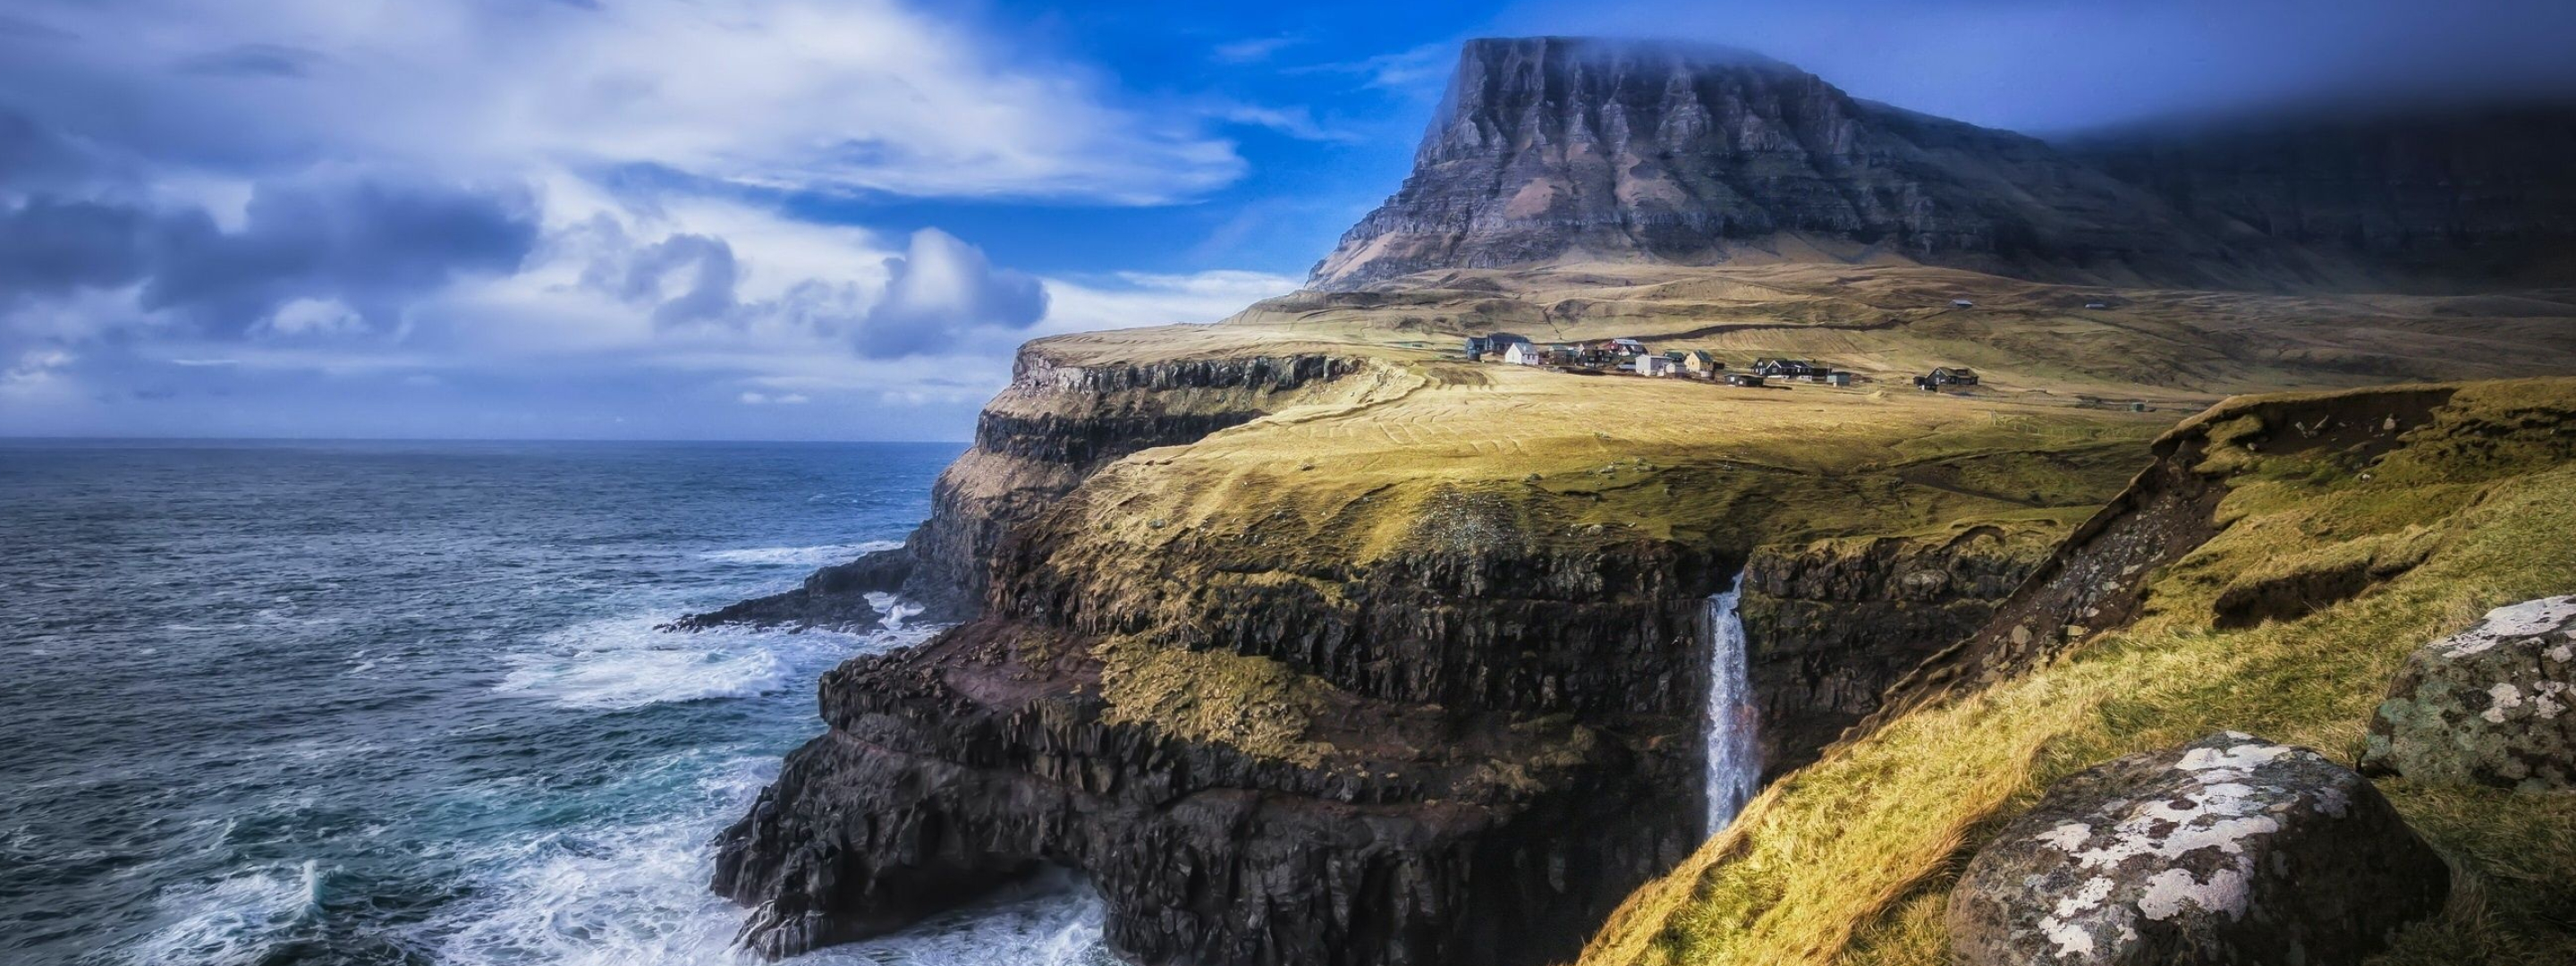 Faroe Islands, Free wallpapers, Stunning backgrounds, Tranquility, 2880x1080 Dual Screen Desktop